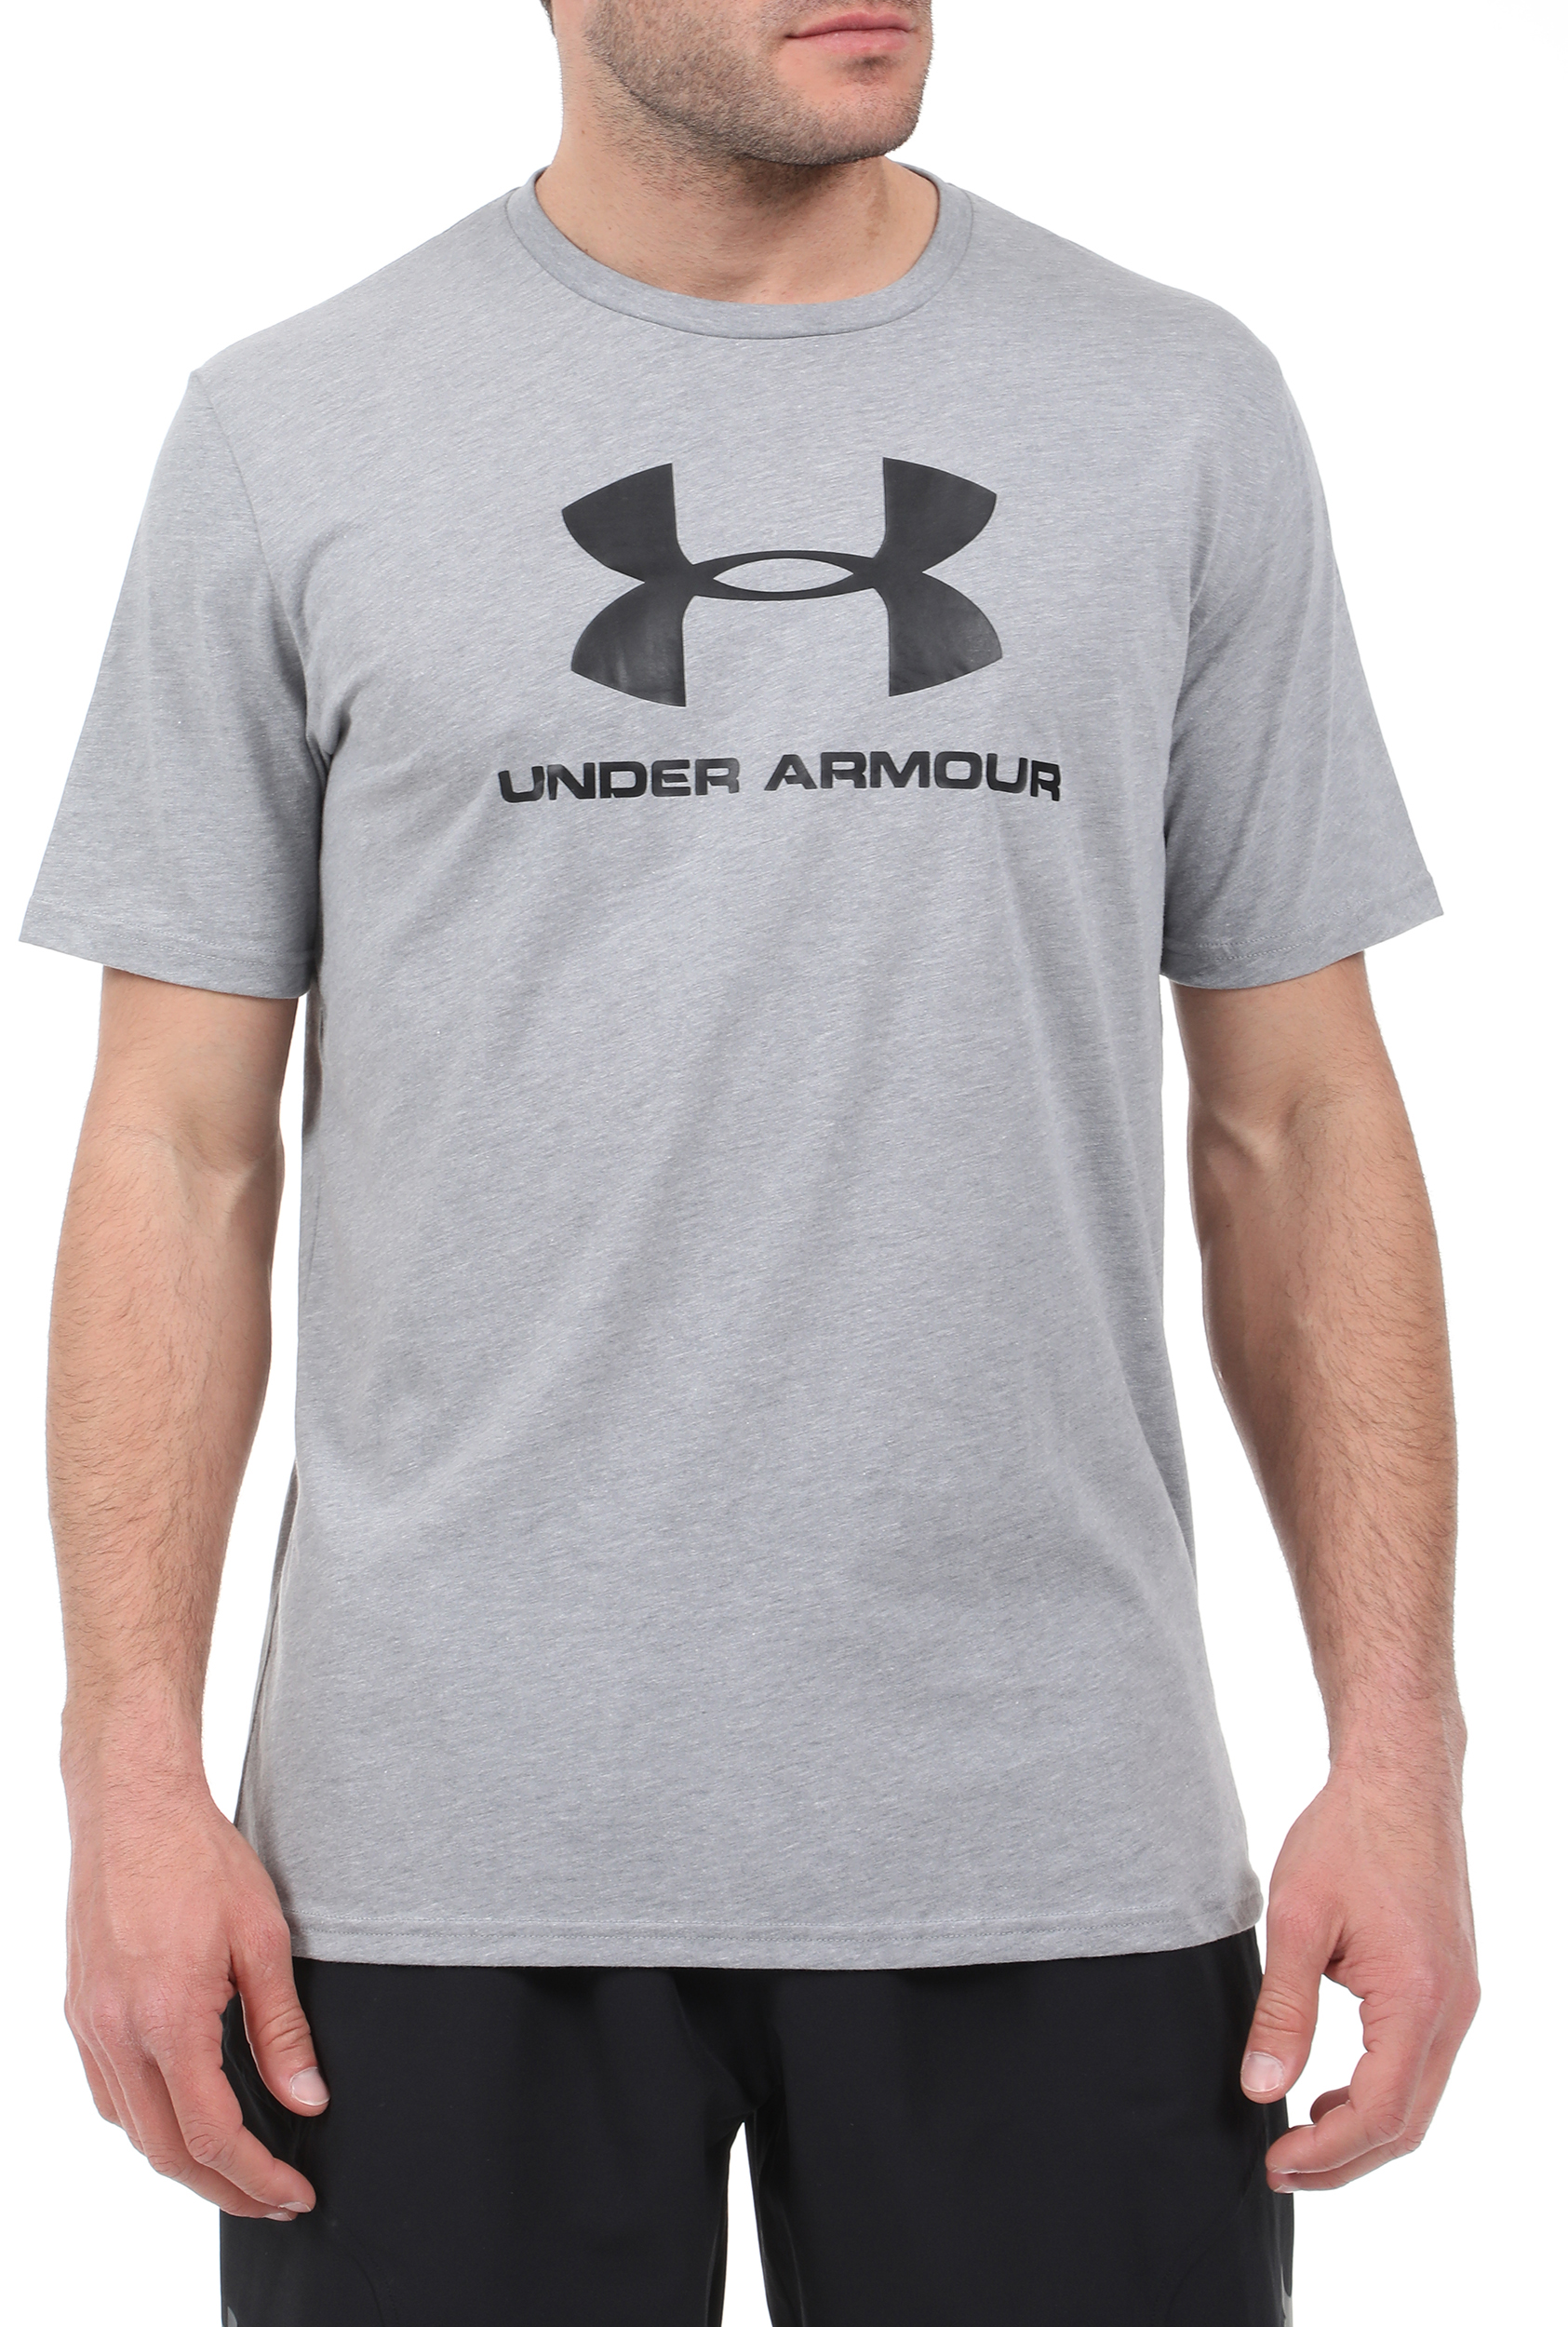 UNDER ARMOUR – Ανδρικο t-shirt UNDER ARMOUR SPORTSTYLE γκρι